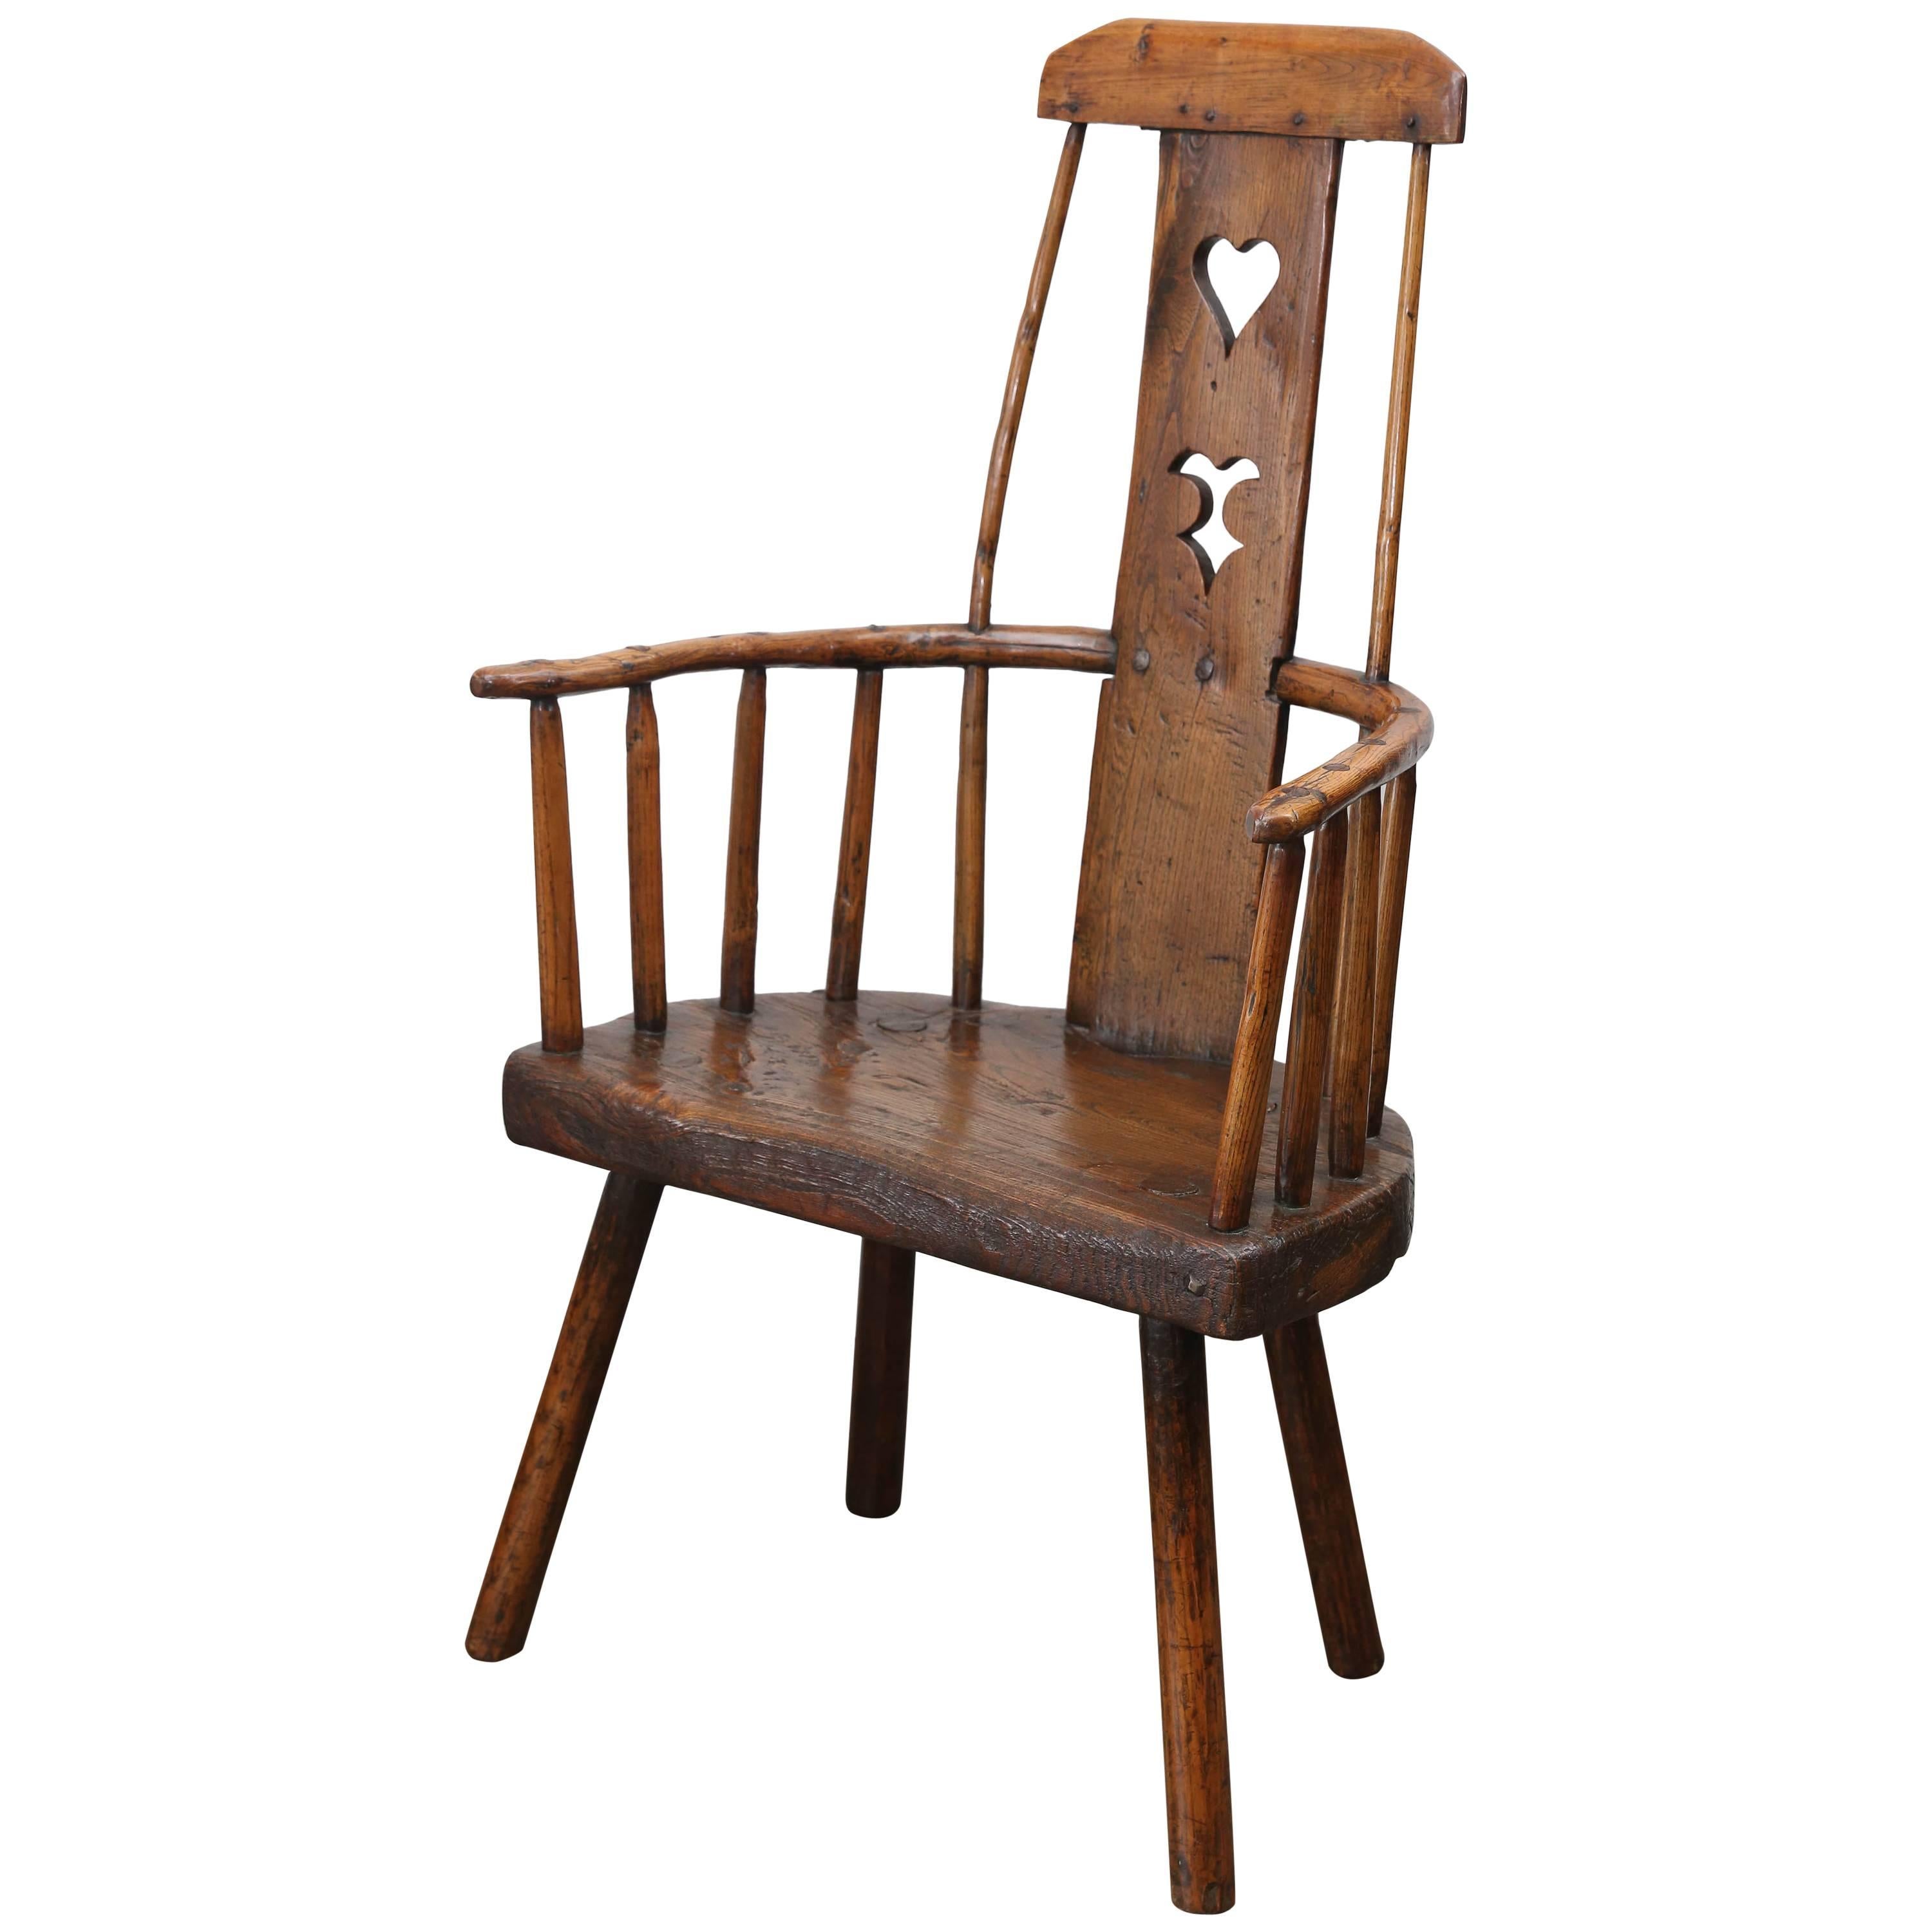 18th Century Welsh Country Folk Art Chair